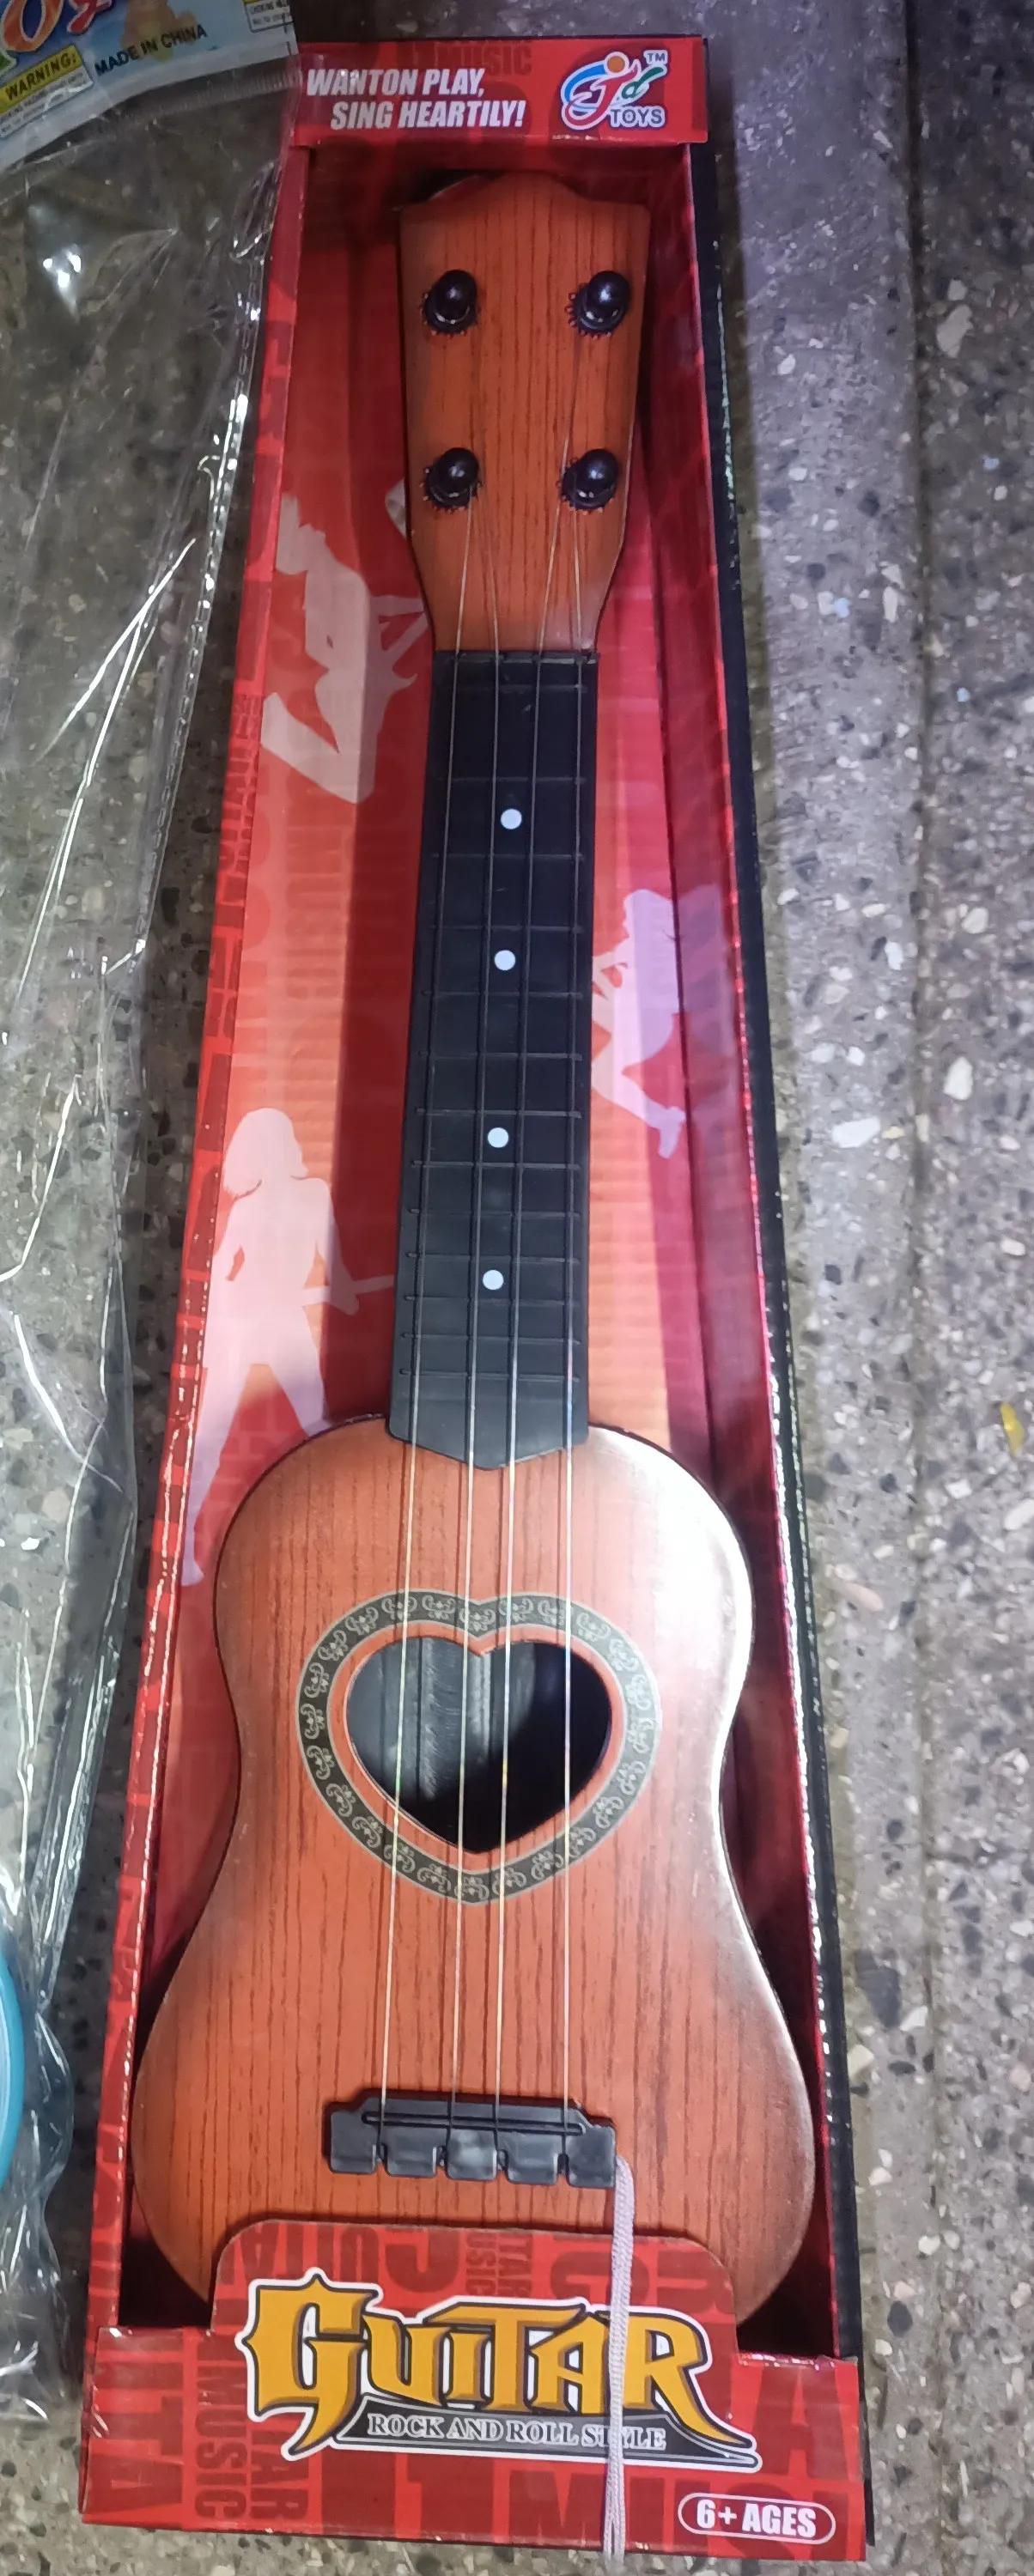 Generic Mini Musical Guitar Toy For Kids